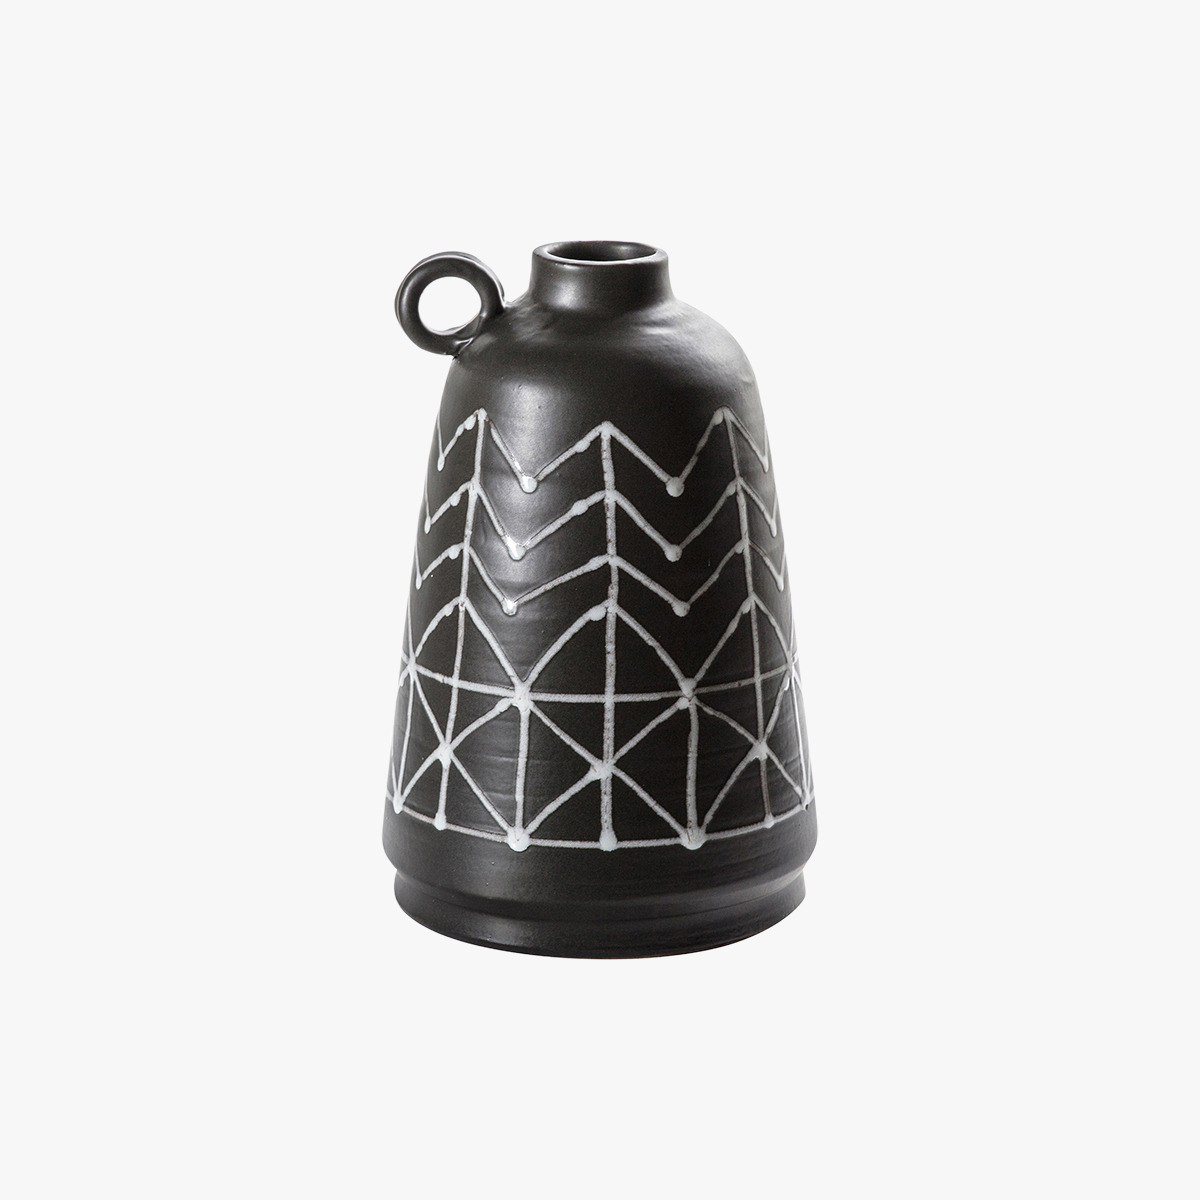 Atzi Black Bottle Vase, Small